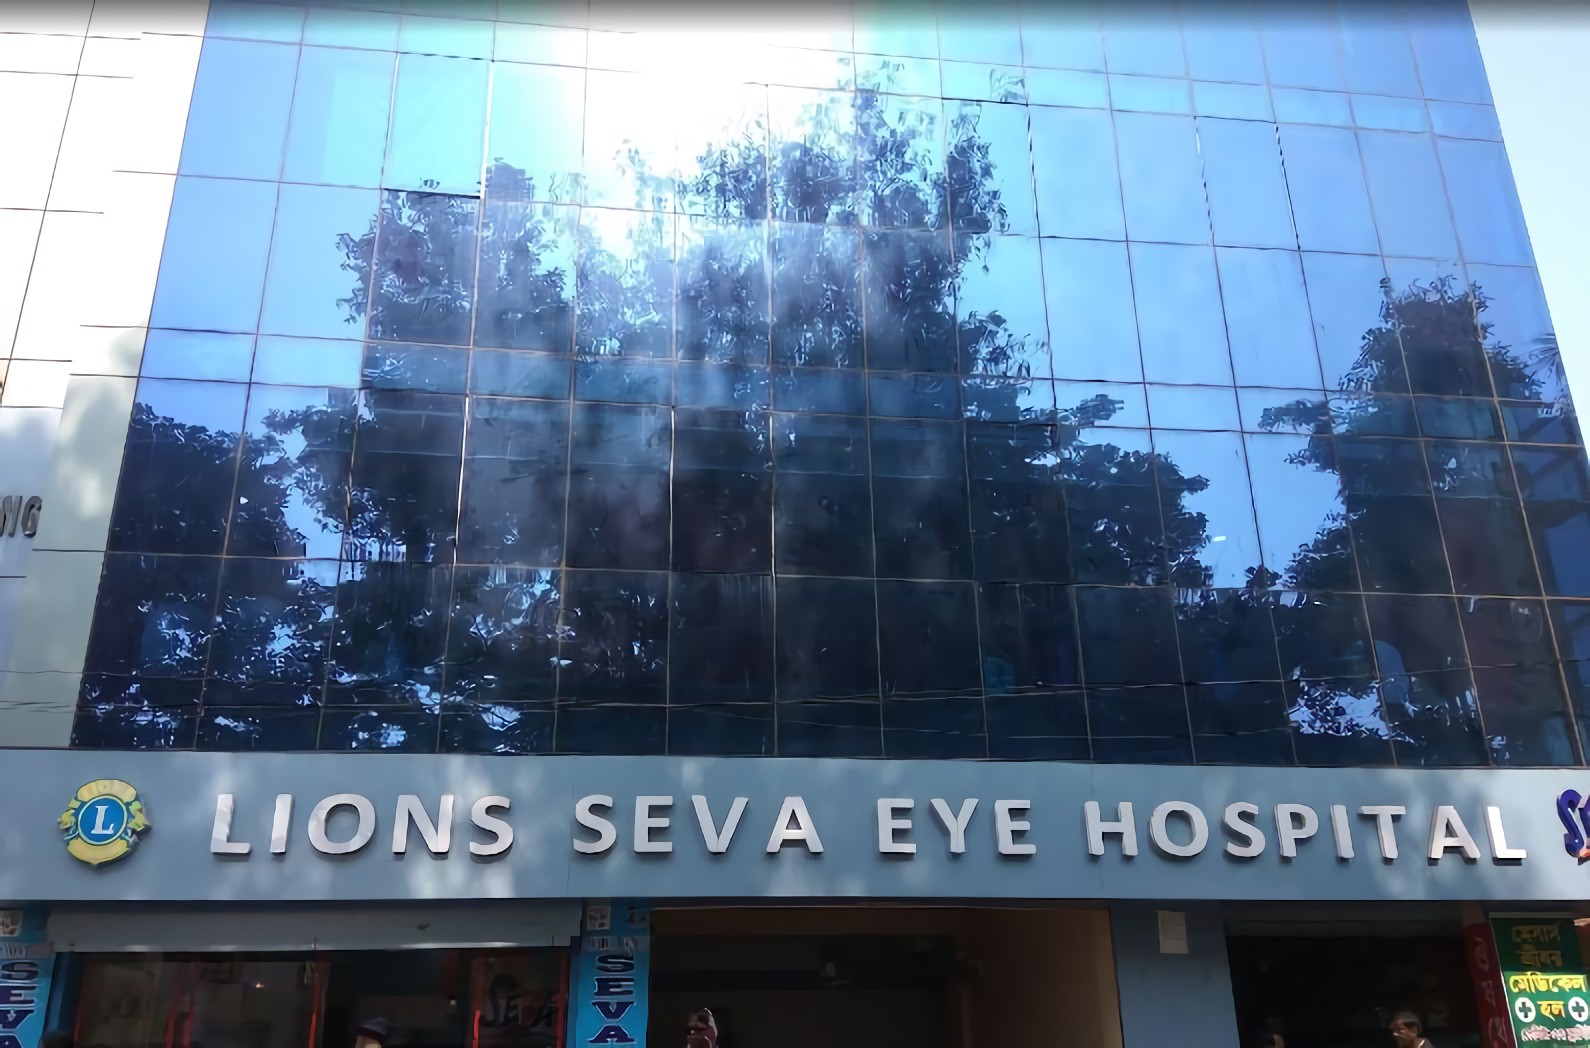 Lions Seva Eye Hospital